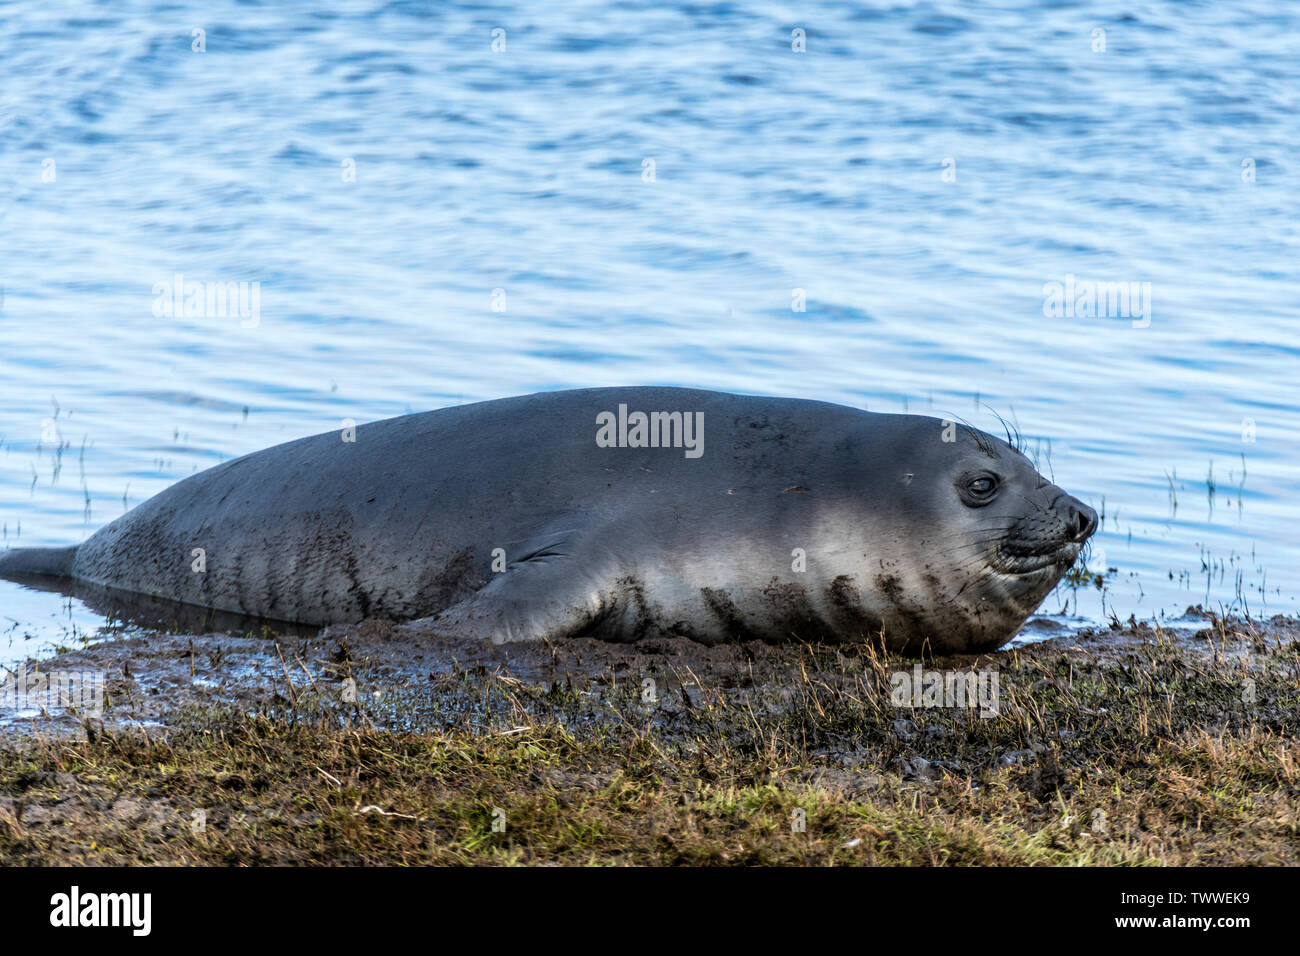 Southern Elephant Seal Pup, Mirounga leonina, Sea Lion Island, in the Falkland Islands, South Atlantic Ocean Stock Photo